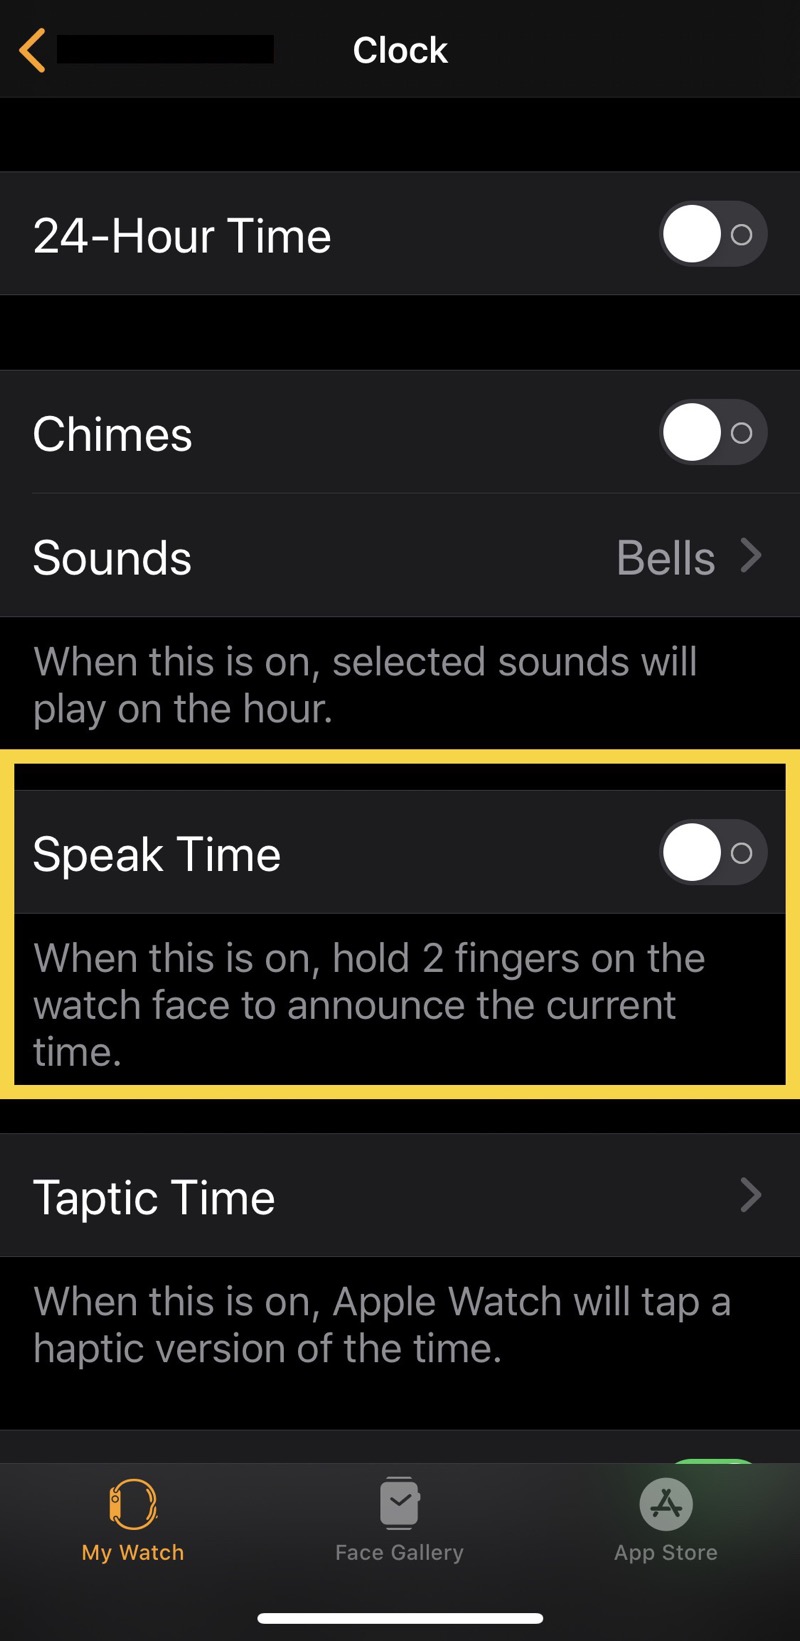 Speak Time setting